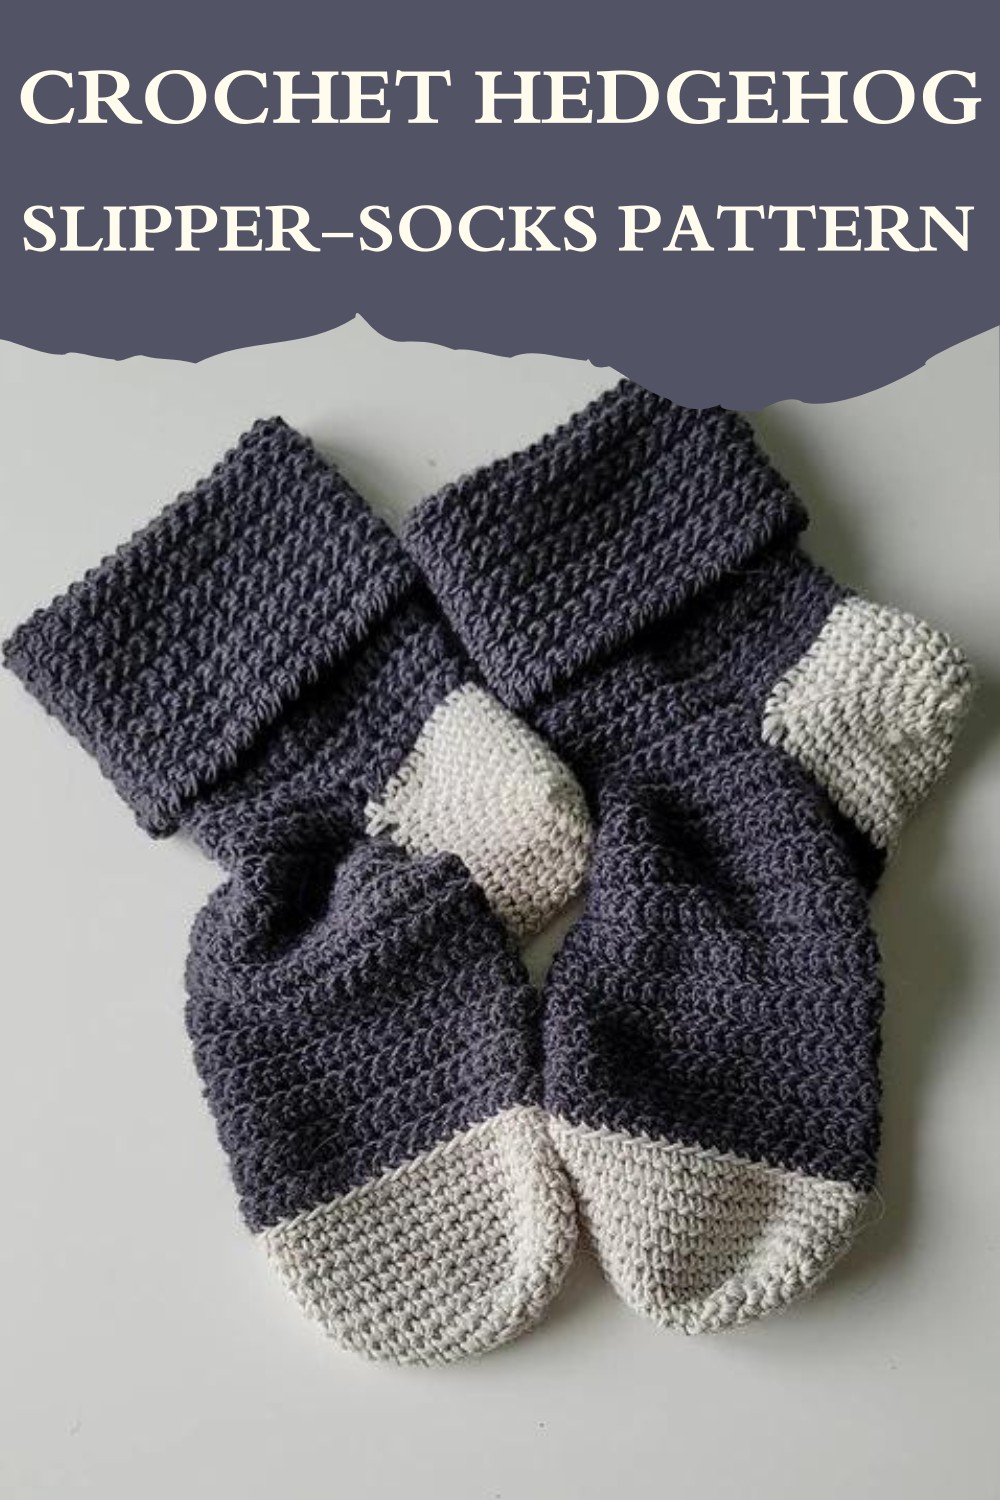 Crochet Hedgehog Slipper-socks Pattern